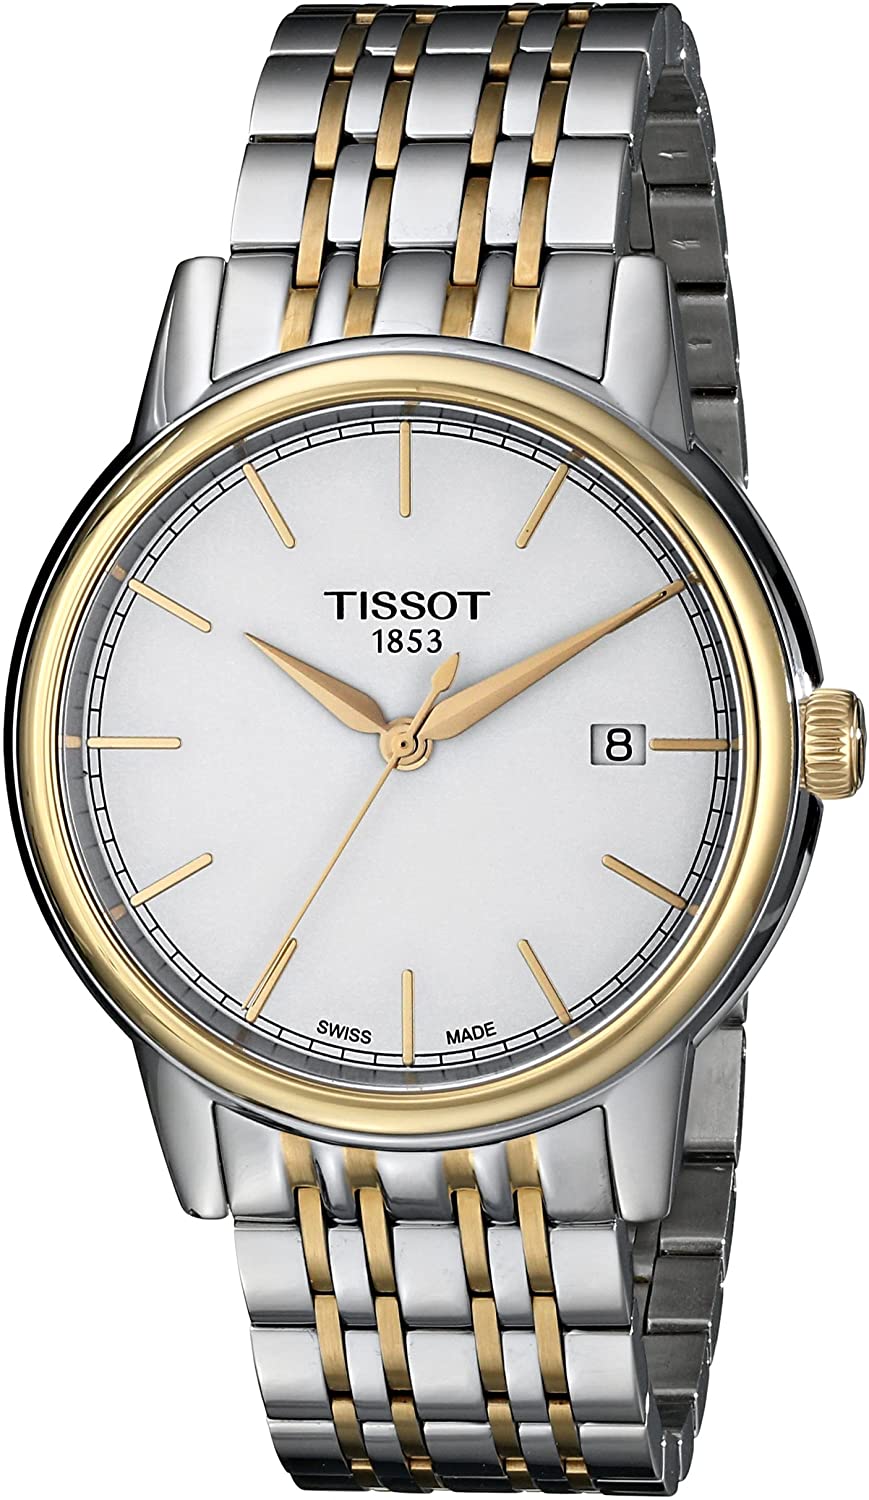 Tissot Men's Watch T0854102201100